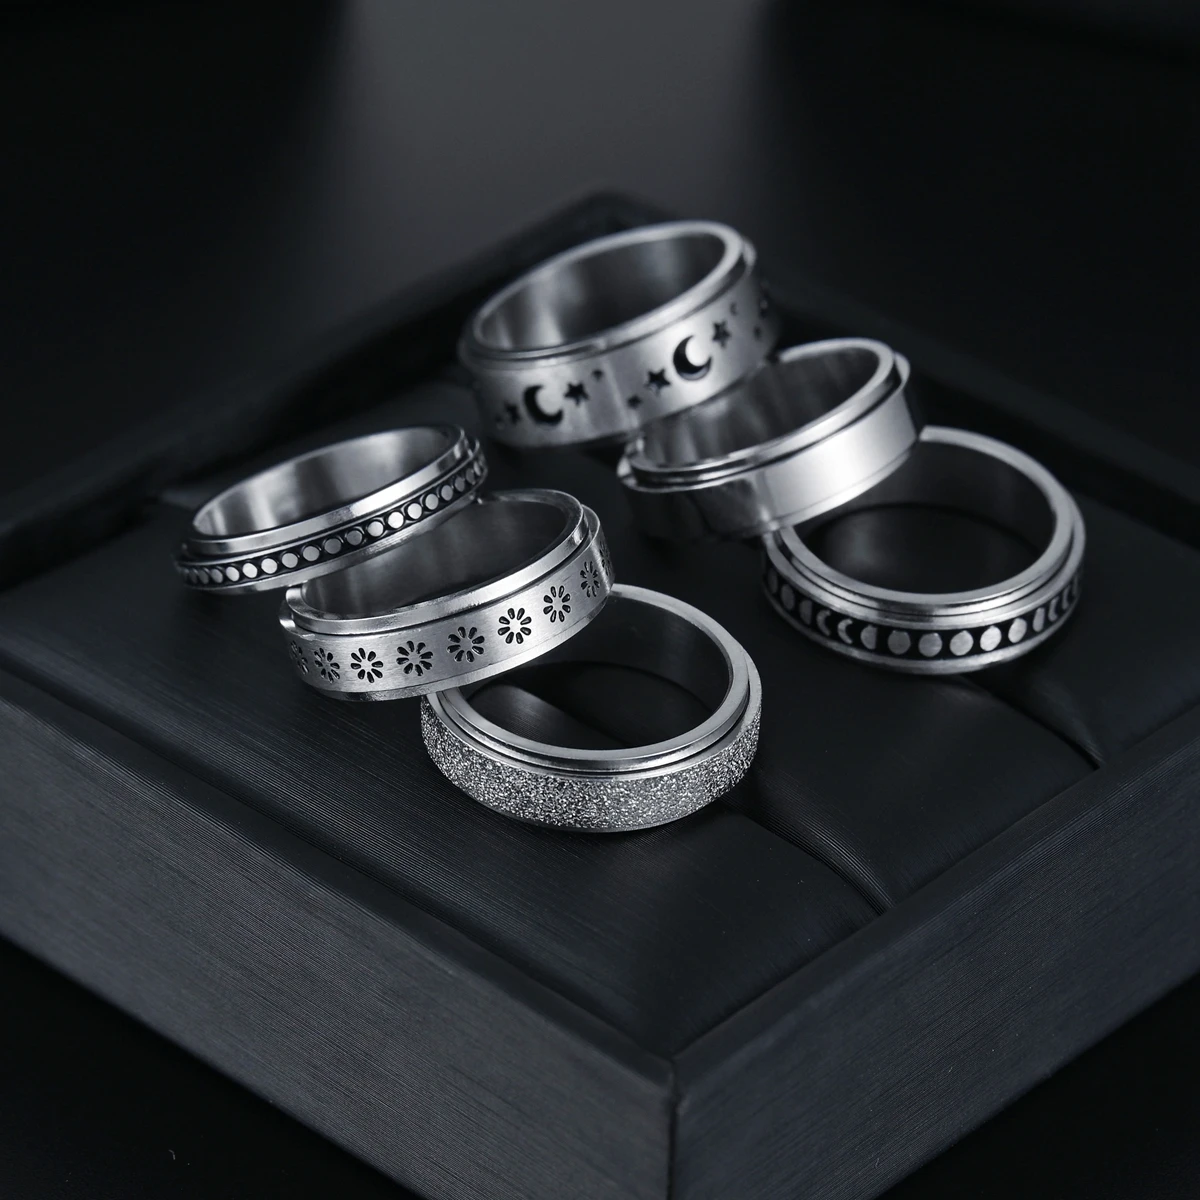 Heart & Flower Ring 925 Sterling Silver 5.7mm Size 4-10 | eBay